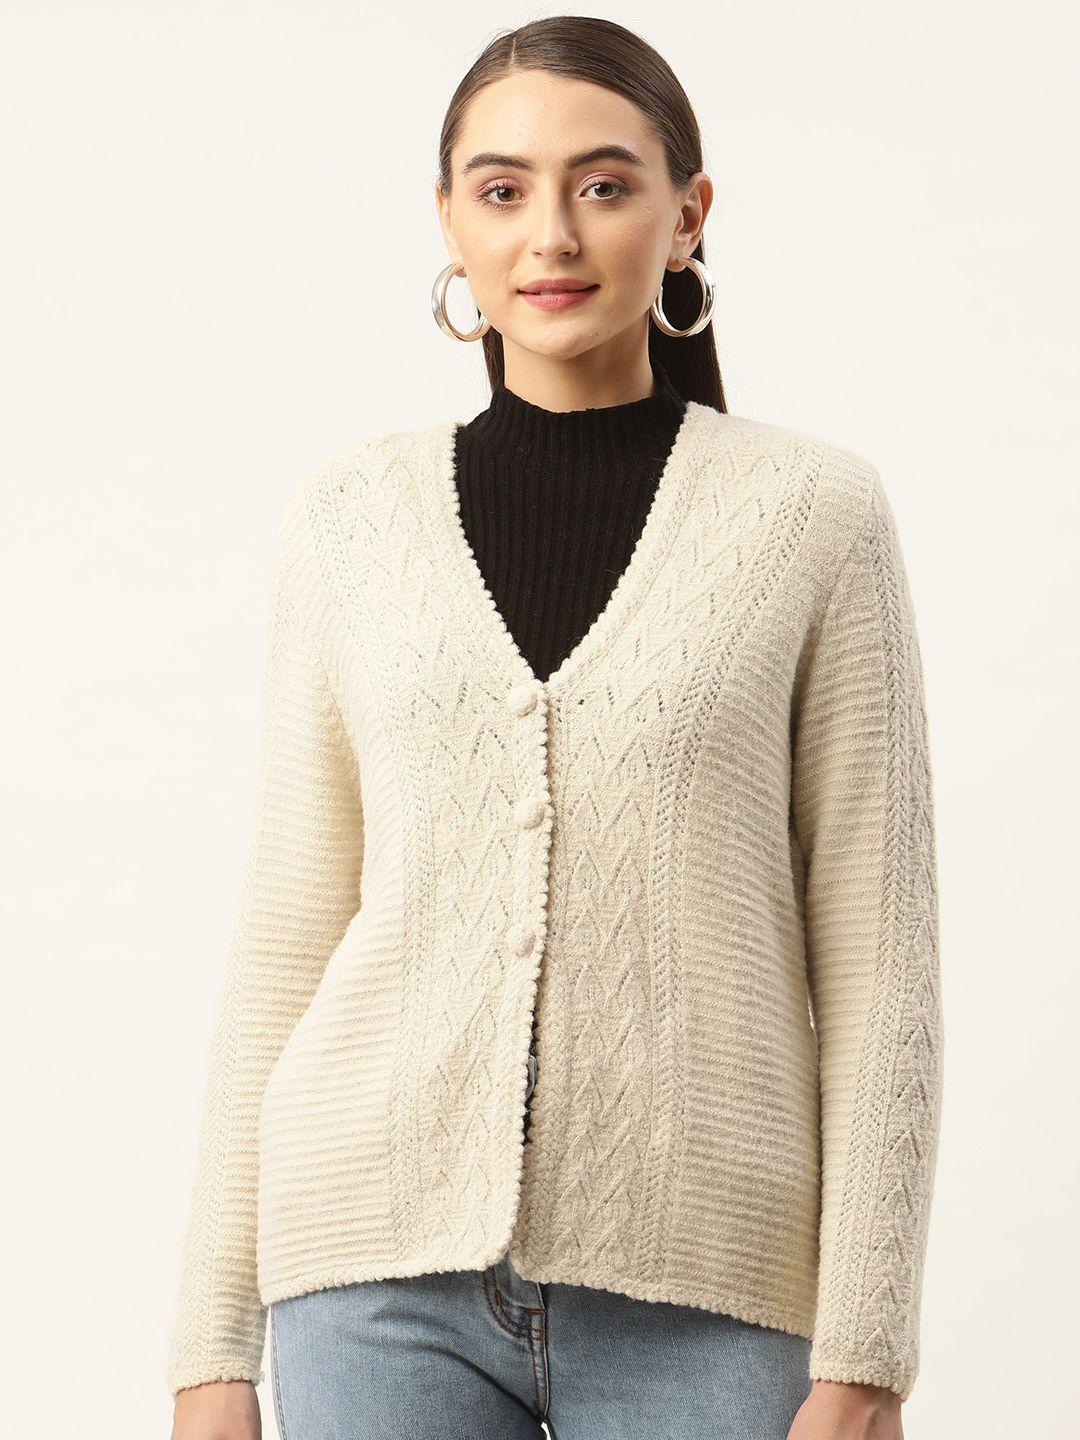 apsley-women-geometric-knitted-cardigan